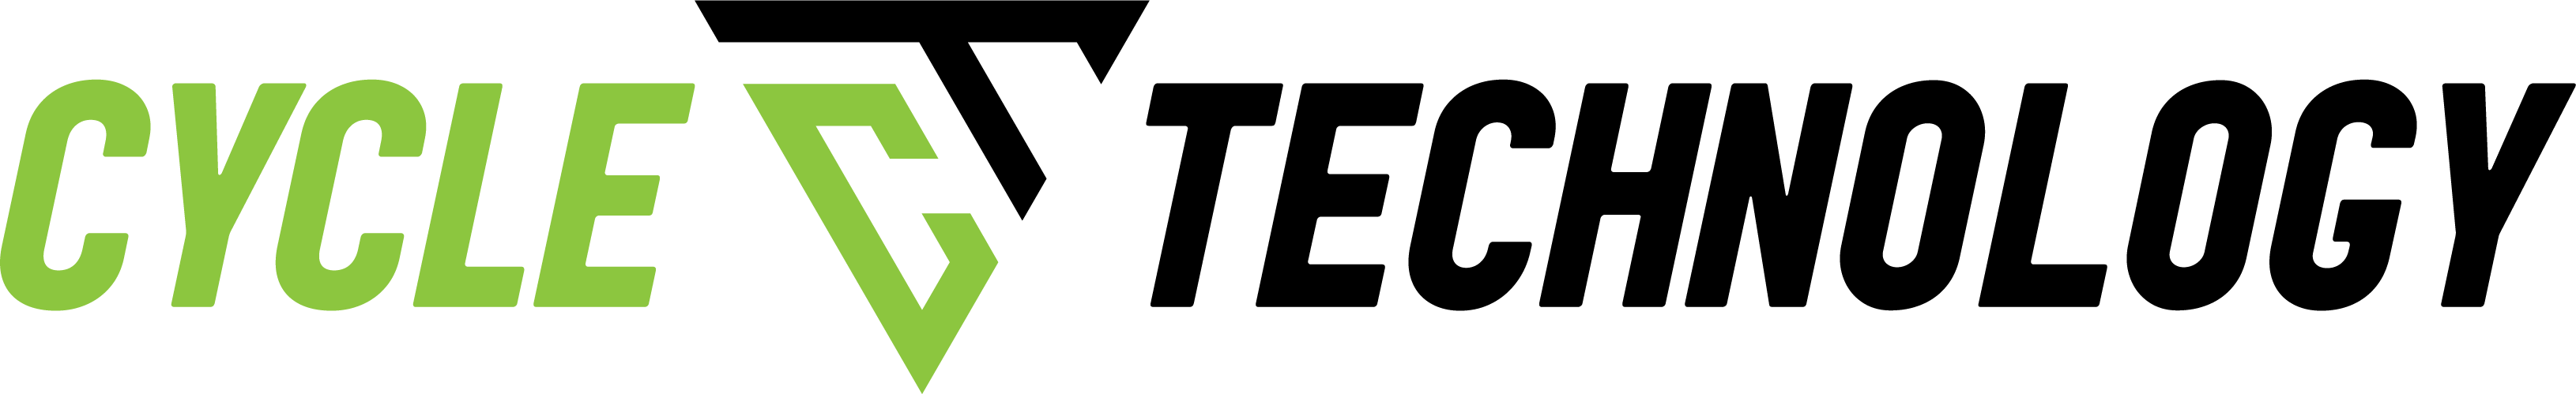 Cycle Technology Logo